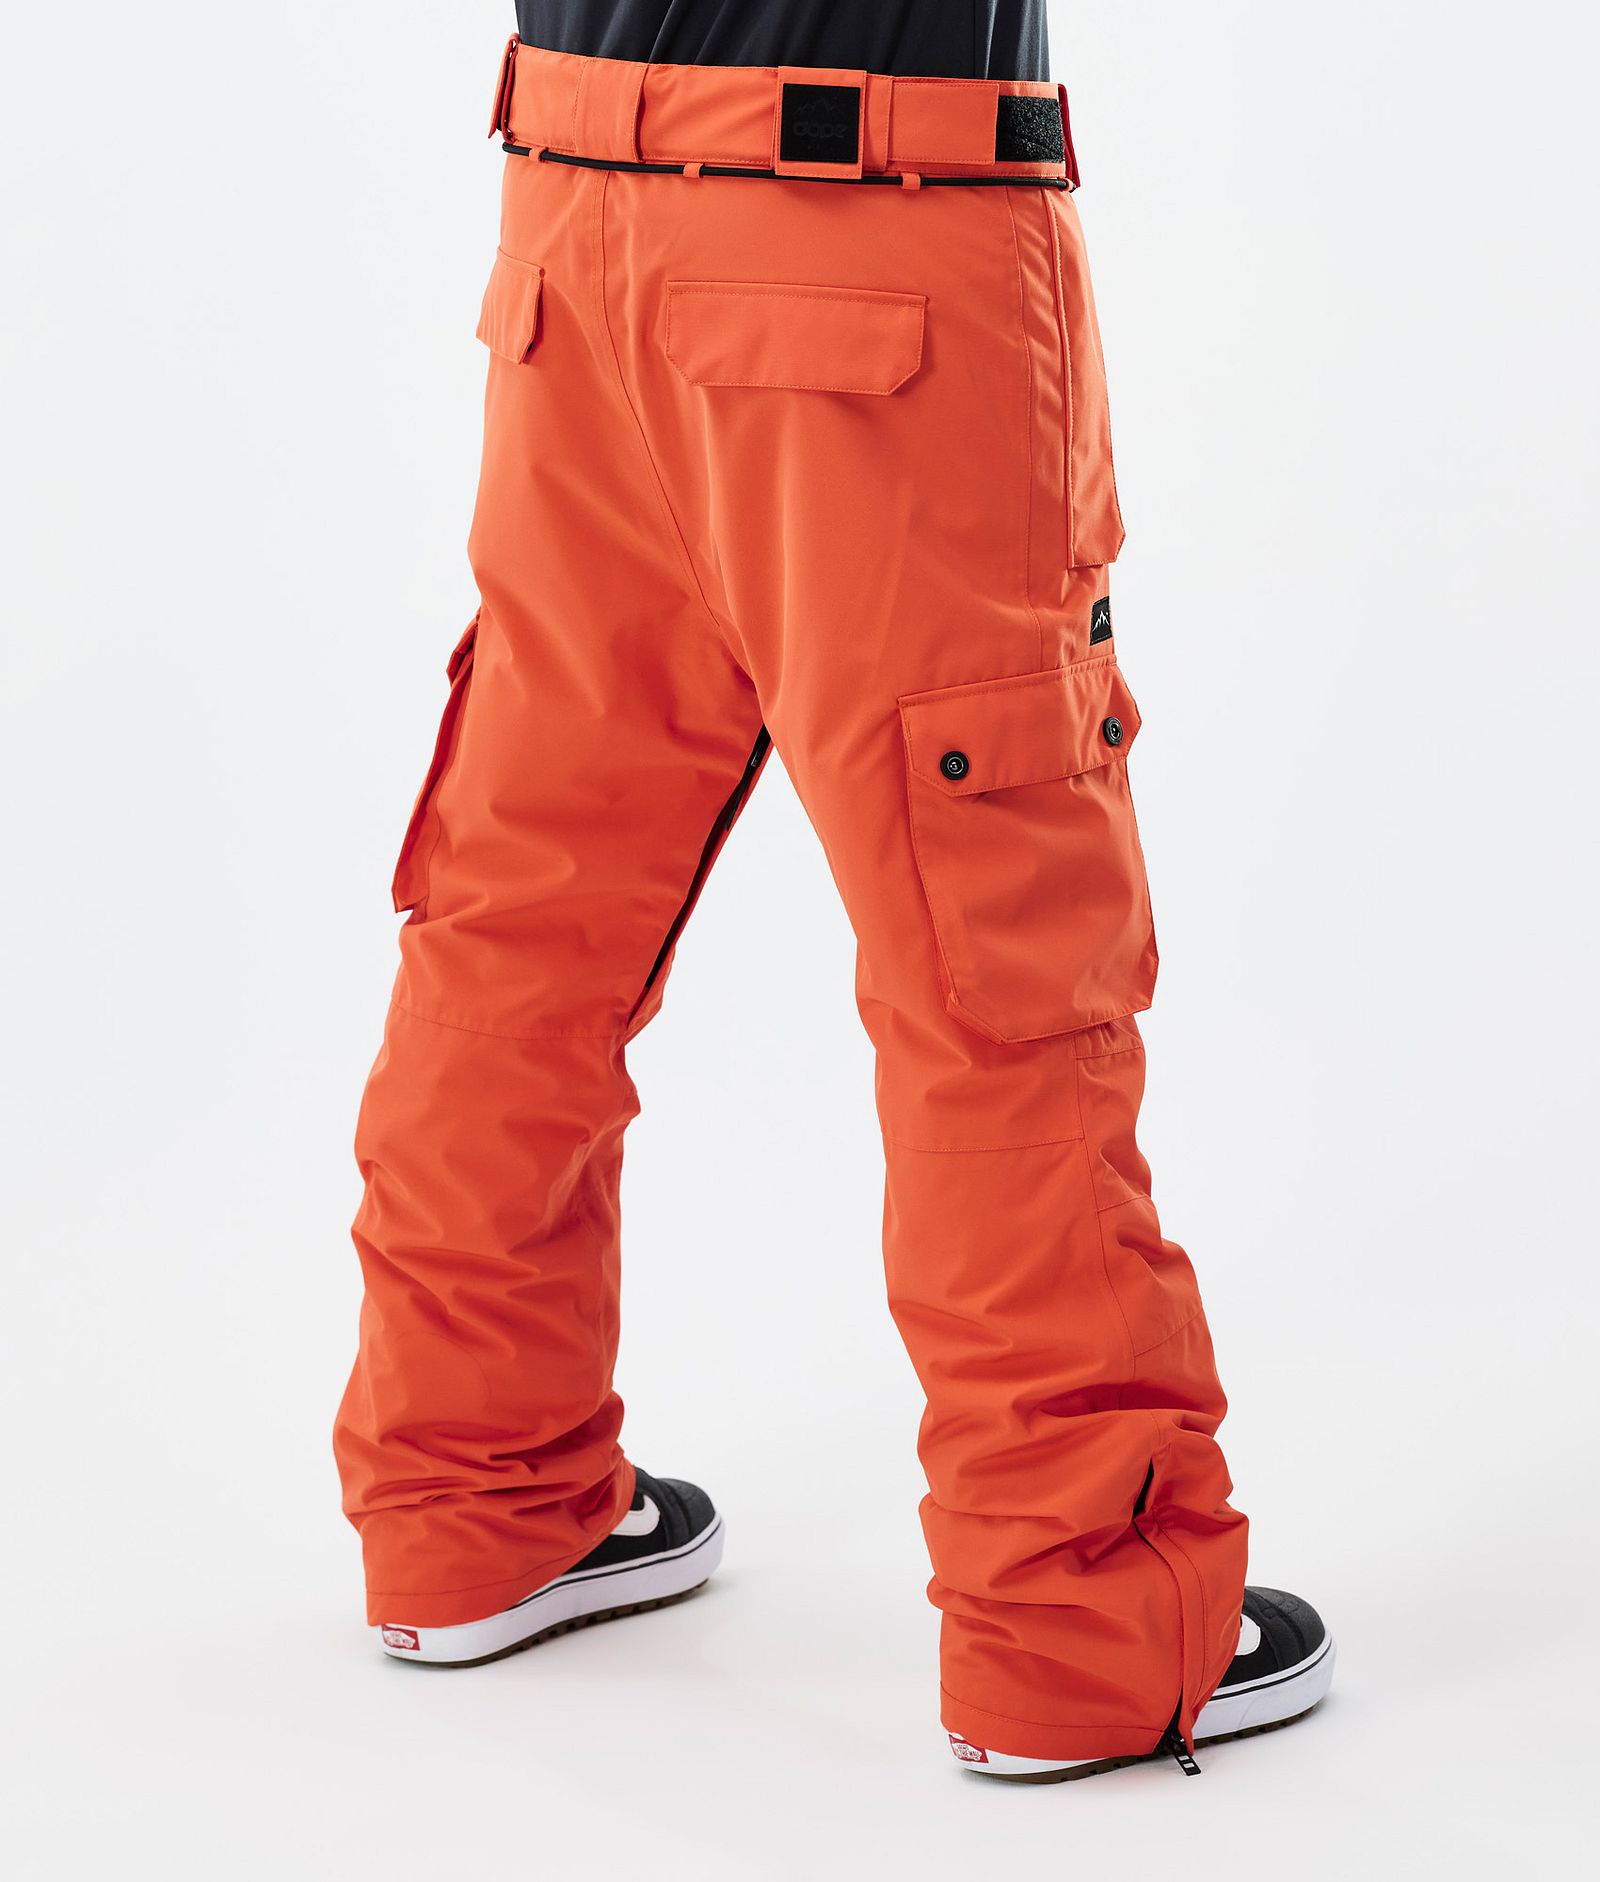 Dope Iconic Pantalones Snowboard Hombre Orange - Naranja